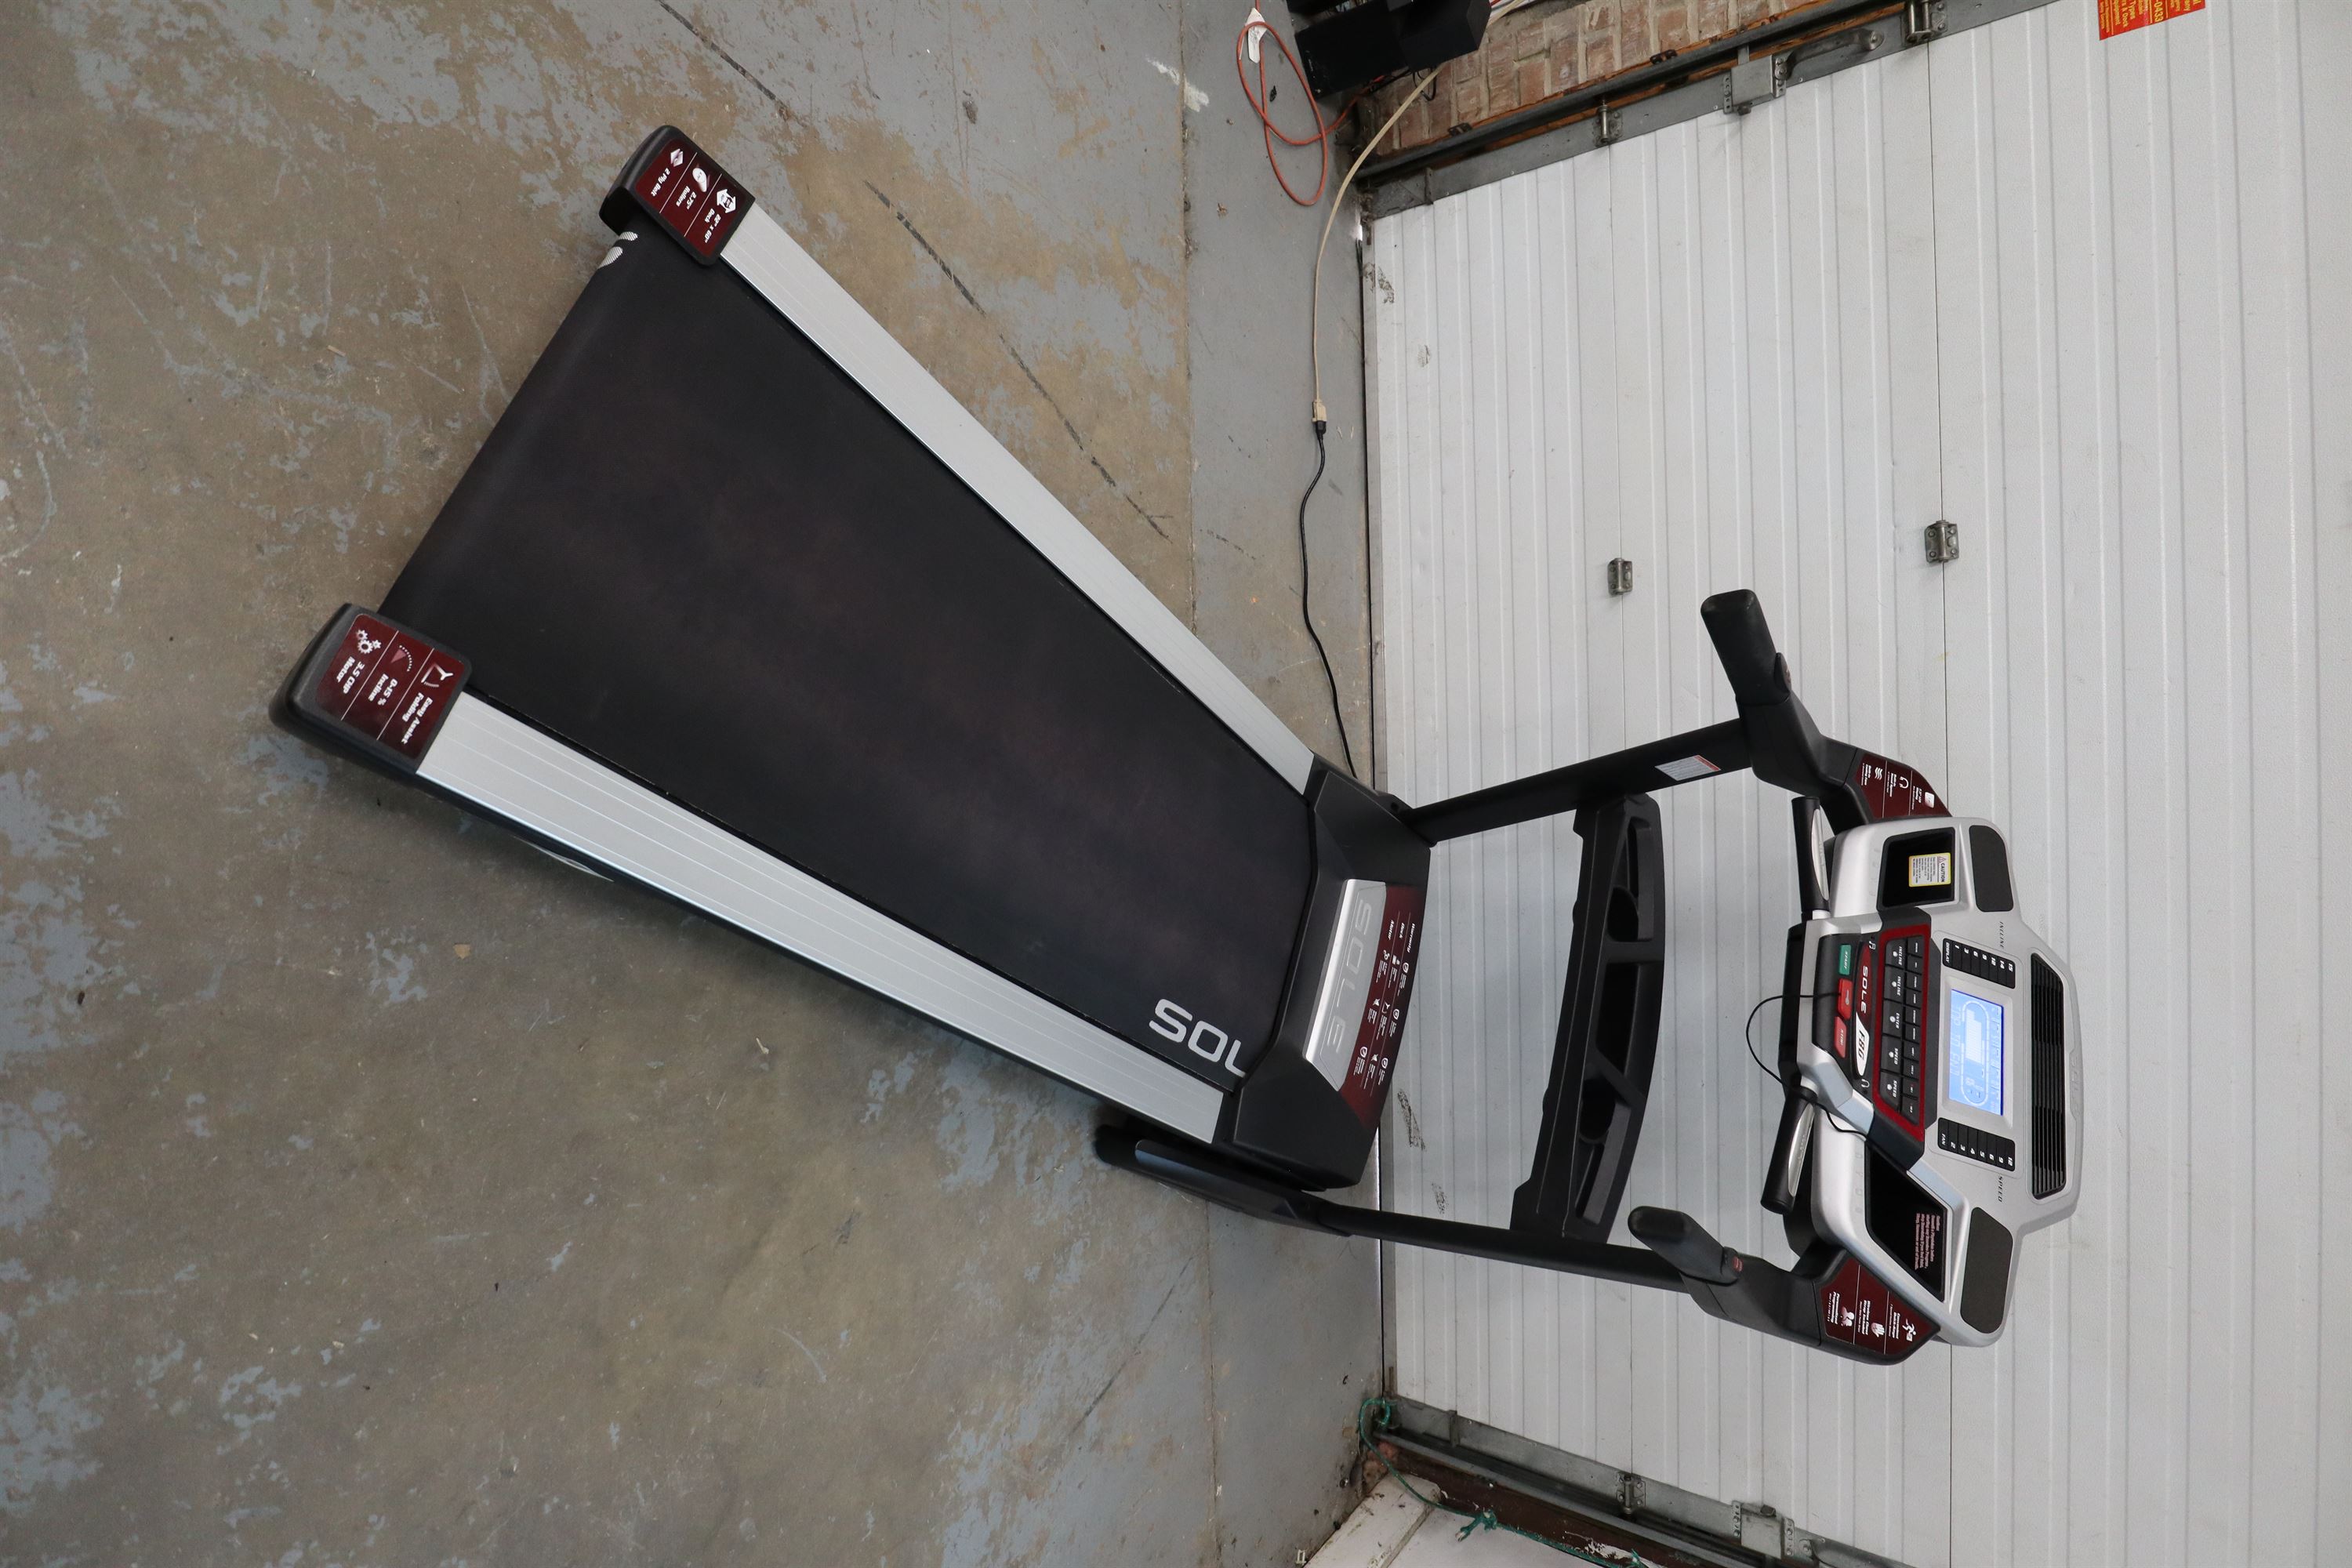 Used Sole F80 580812 Folding Treadmill